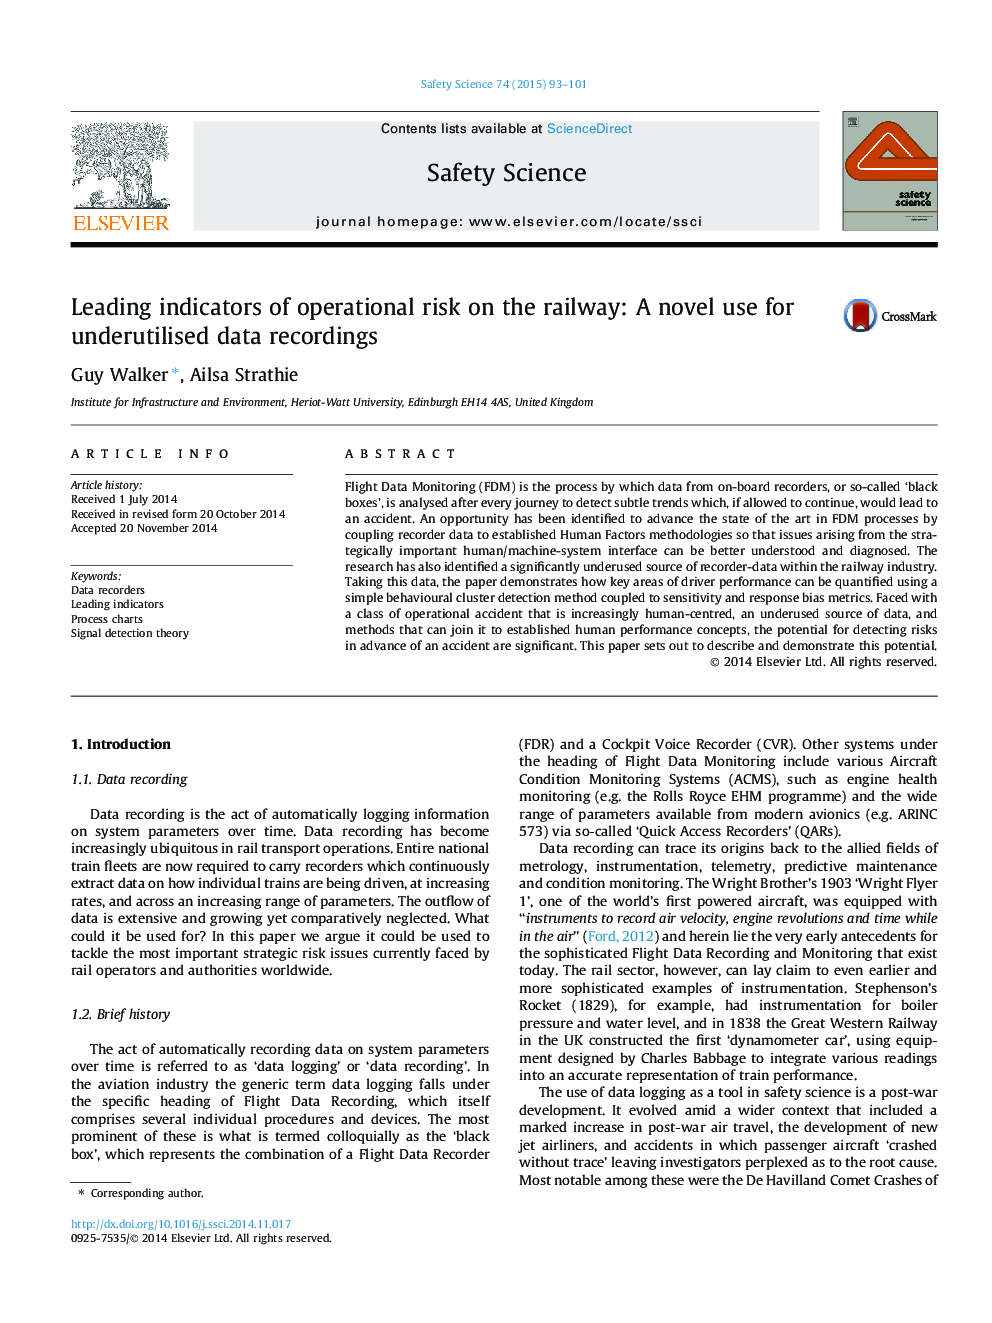 Leading indicators of operational risk on the railway: A novel use for underutilised data recordings